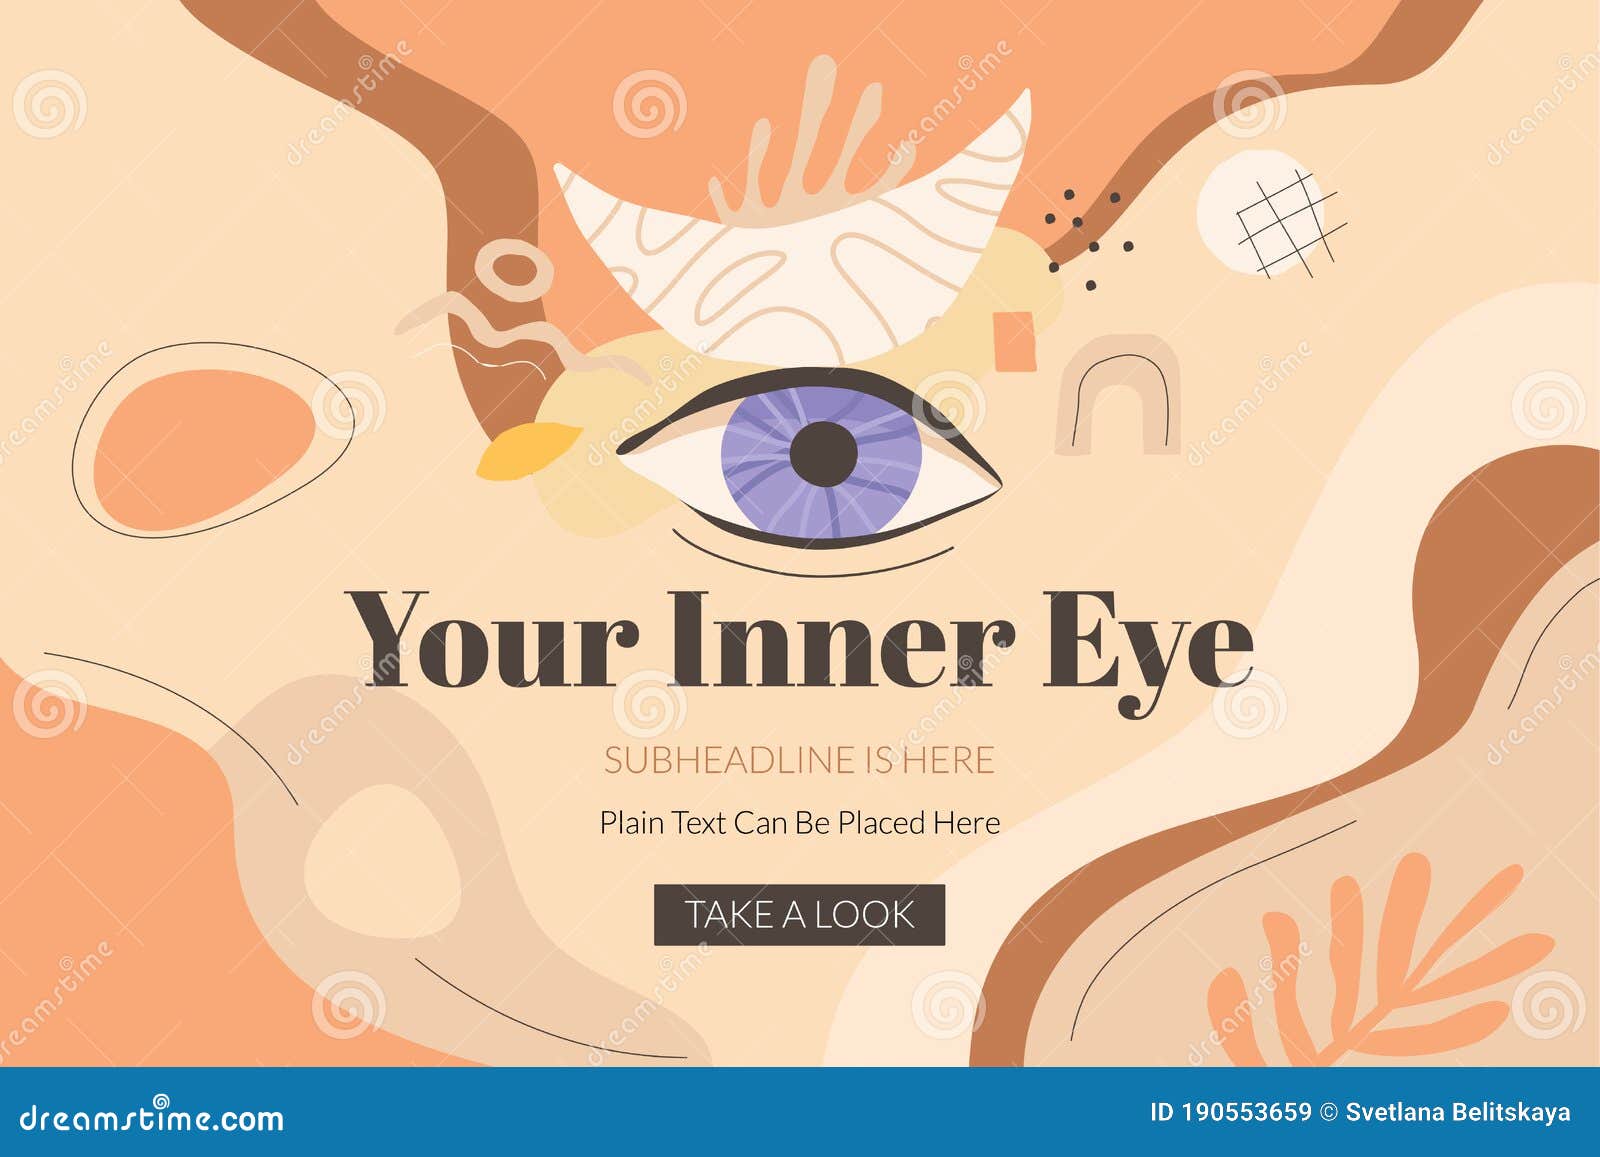 Your Inner Eye Banner Template Stock Vector Illustration Of Colors Minimal